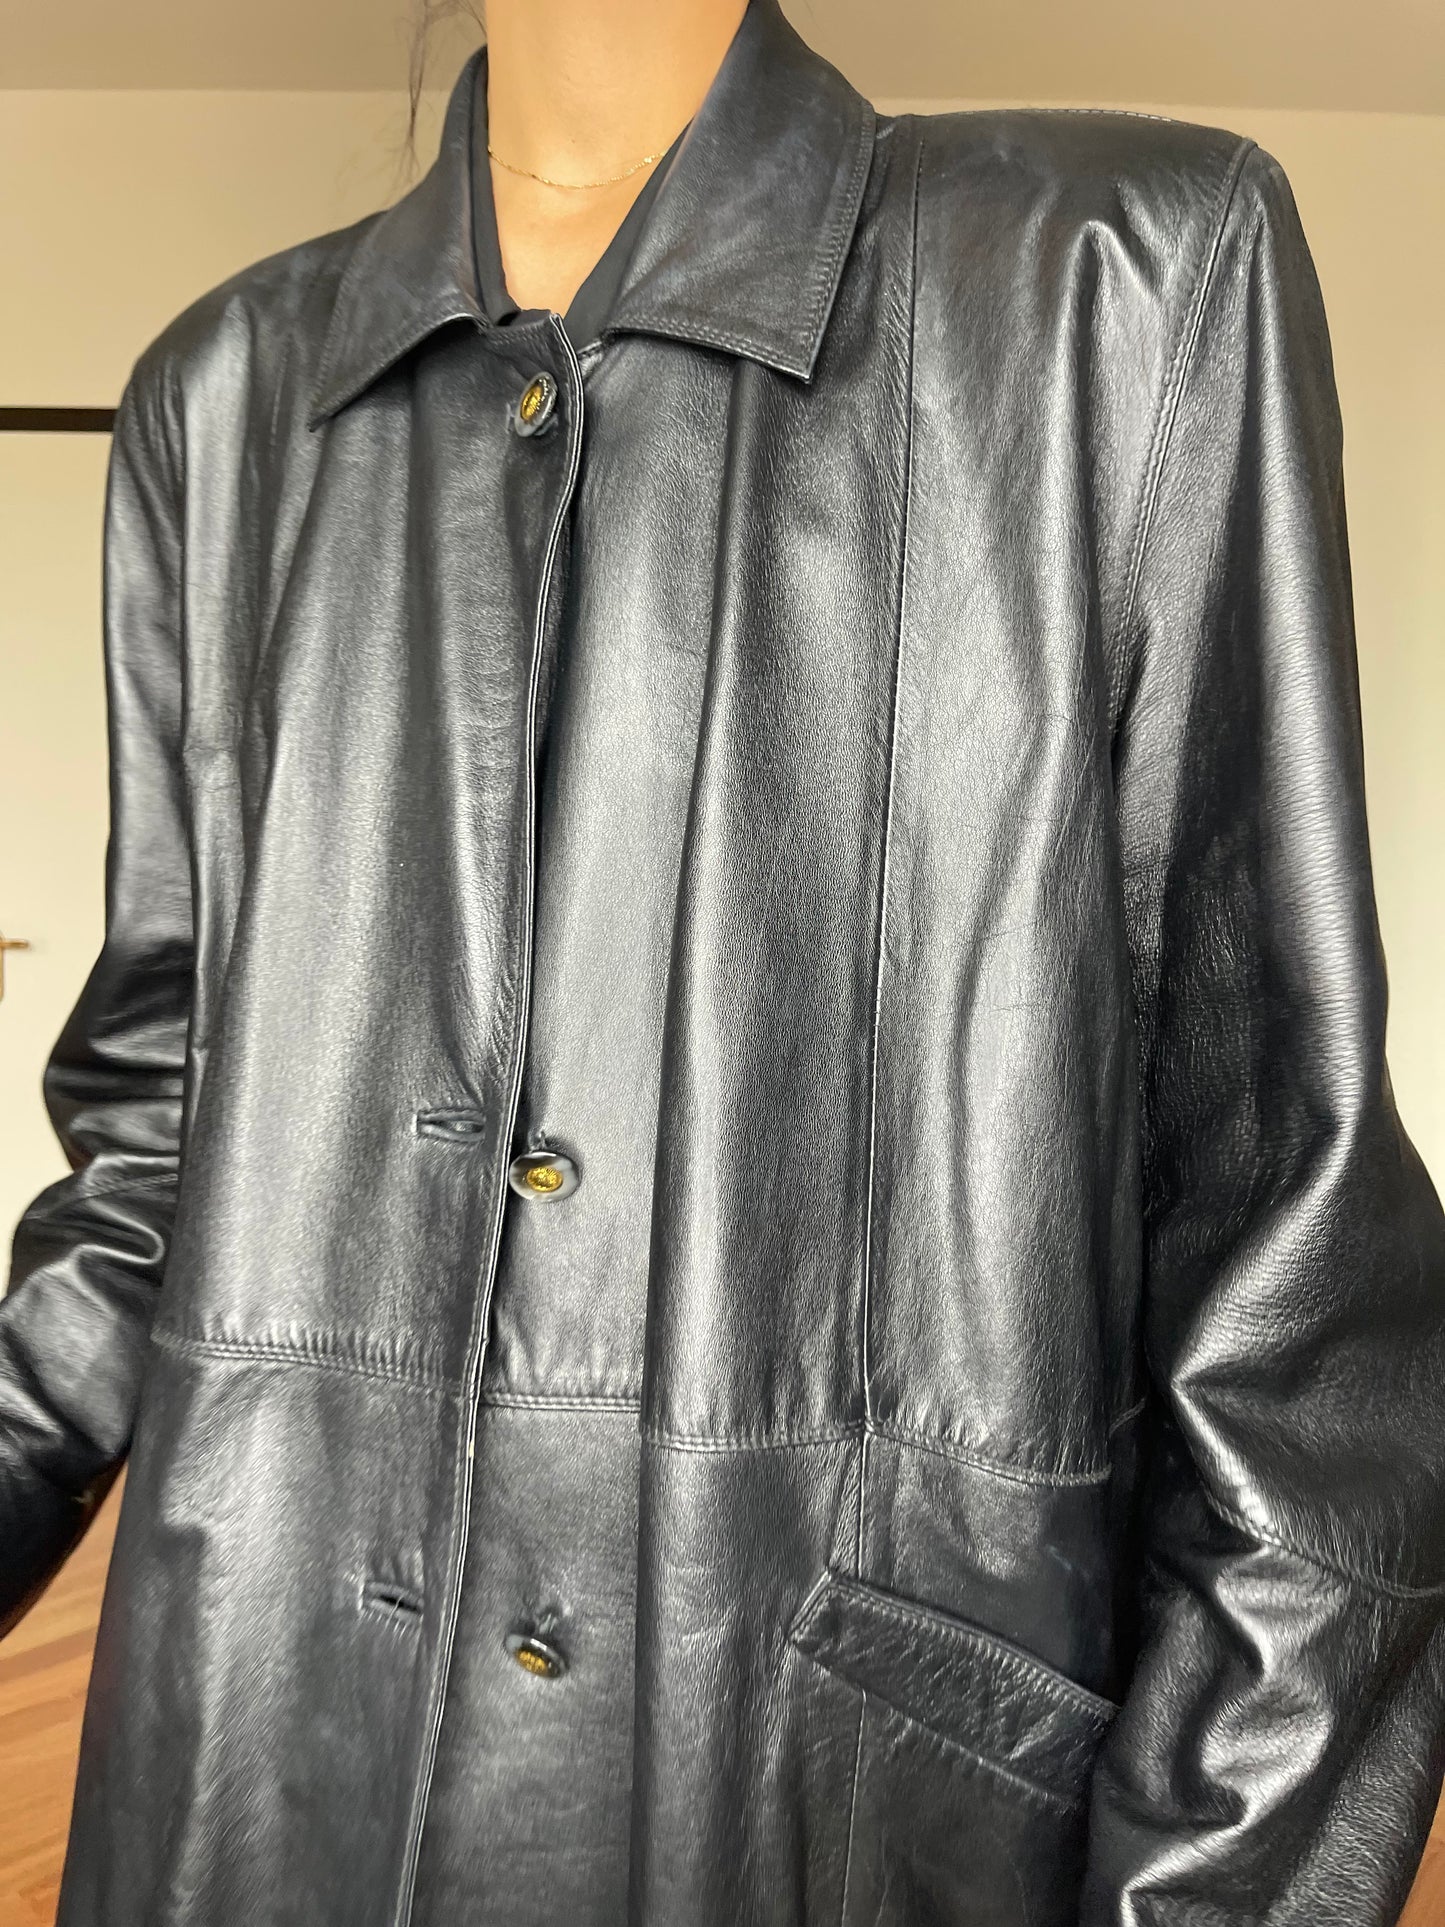 Indispensabile leather coat